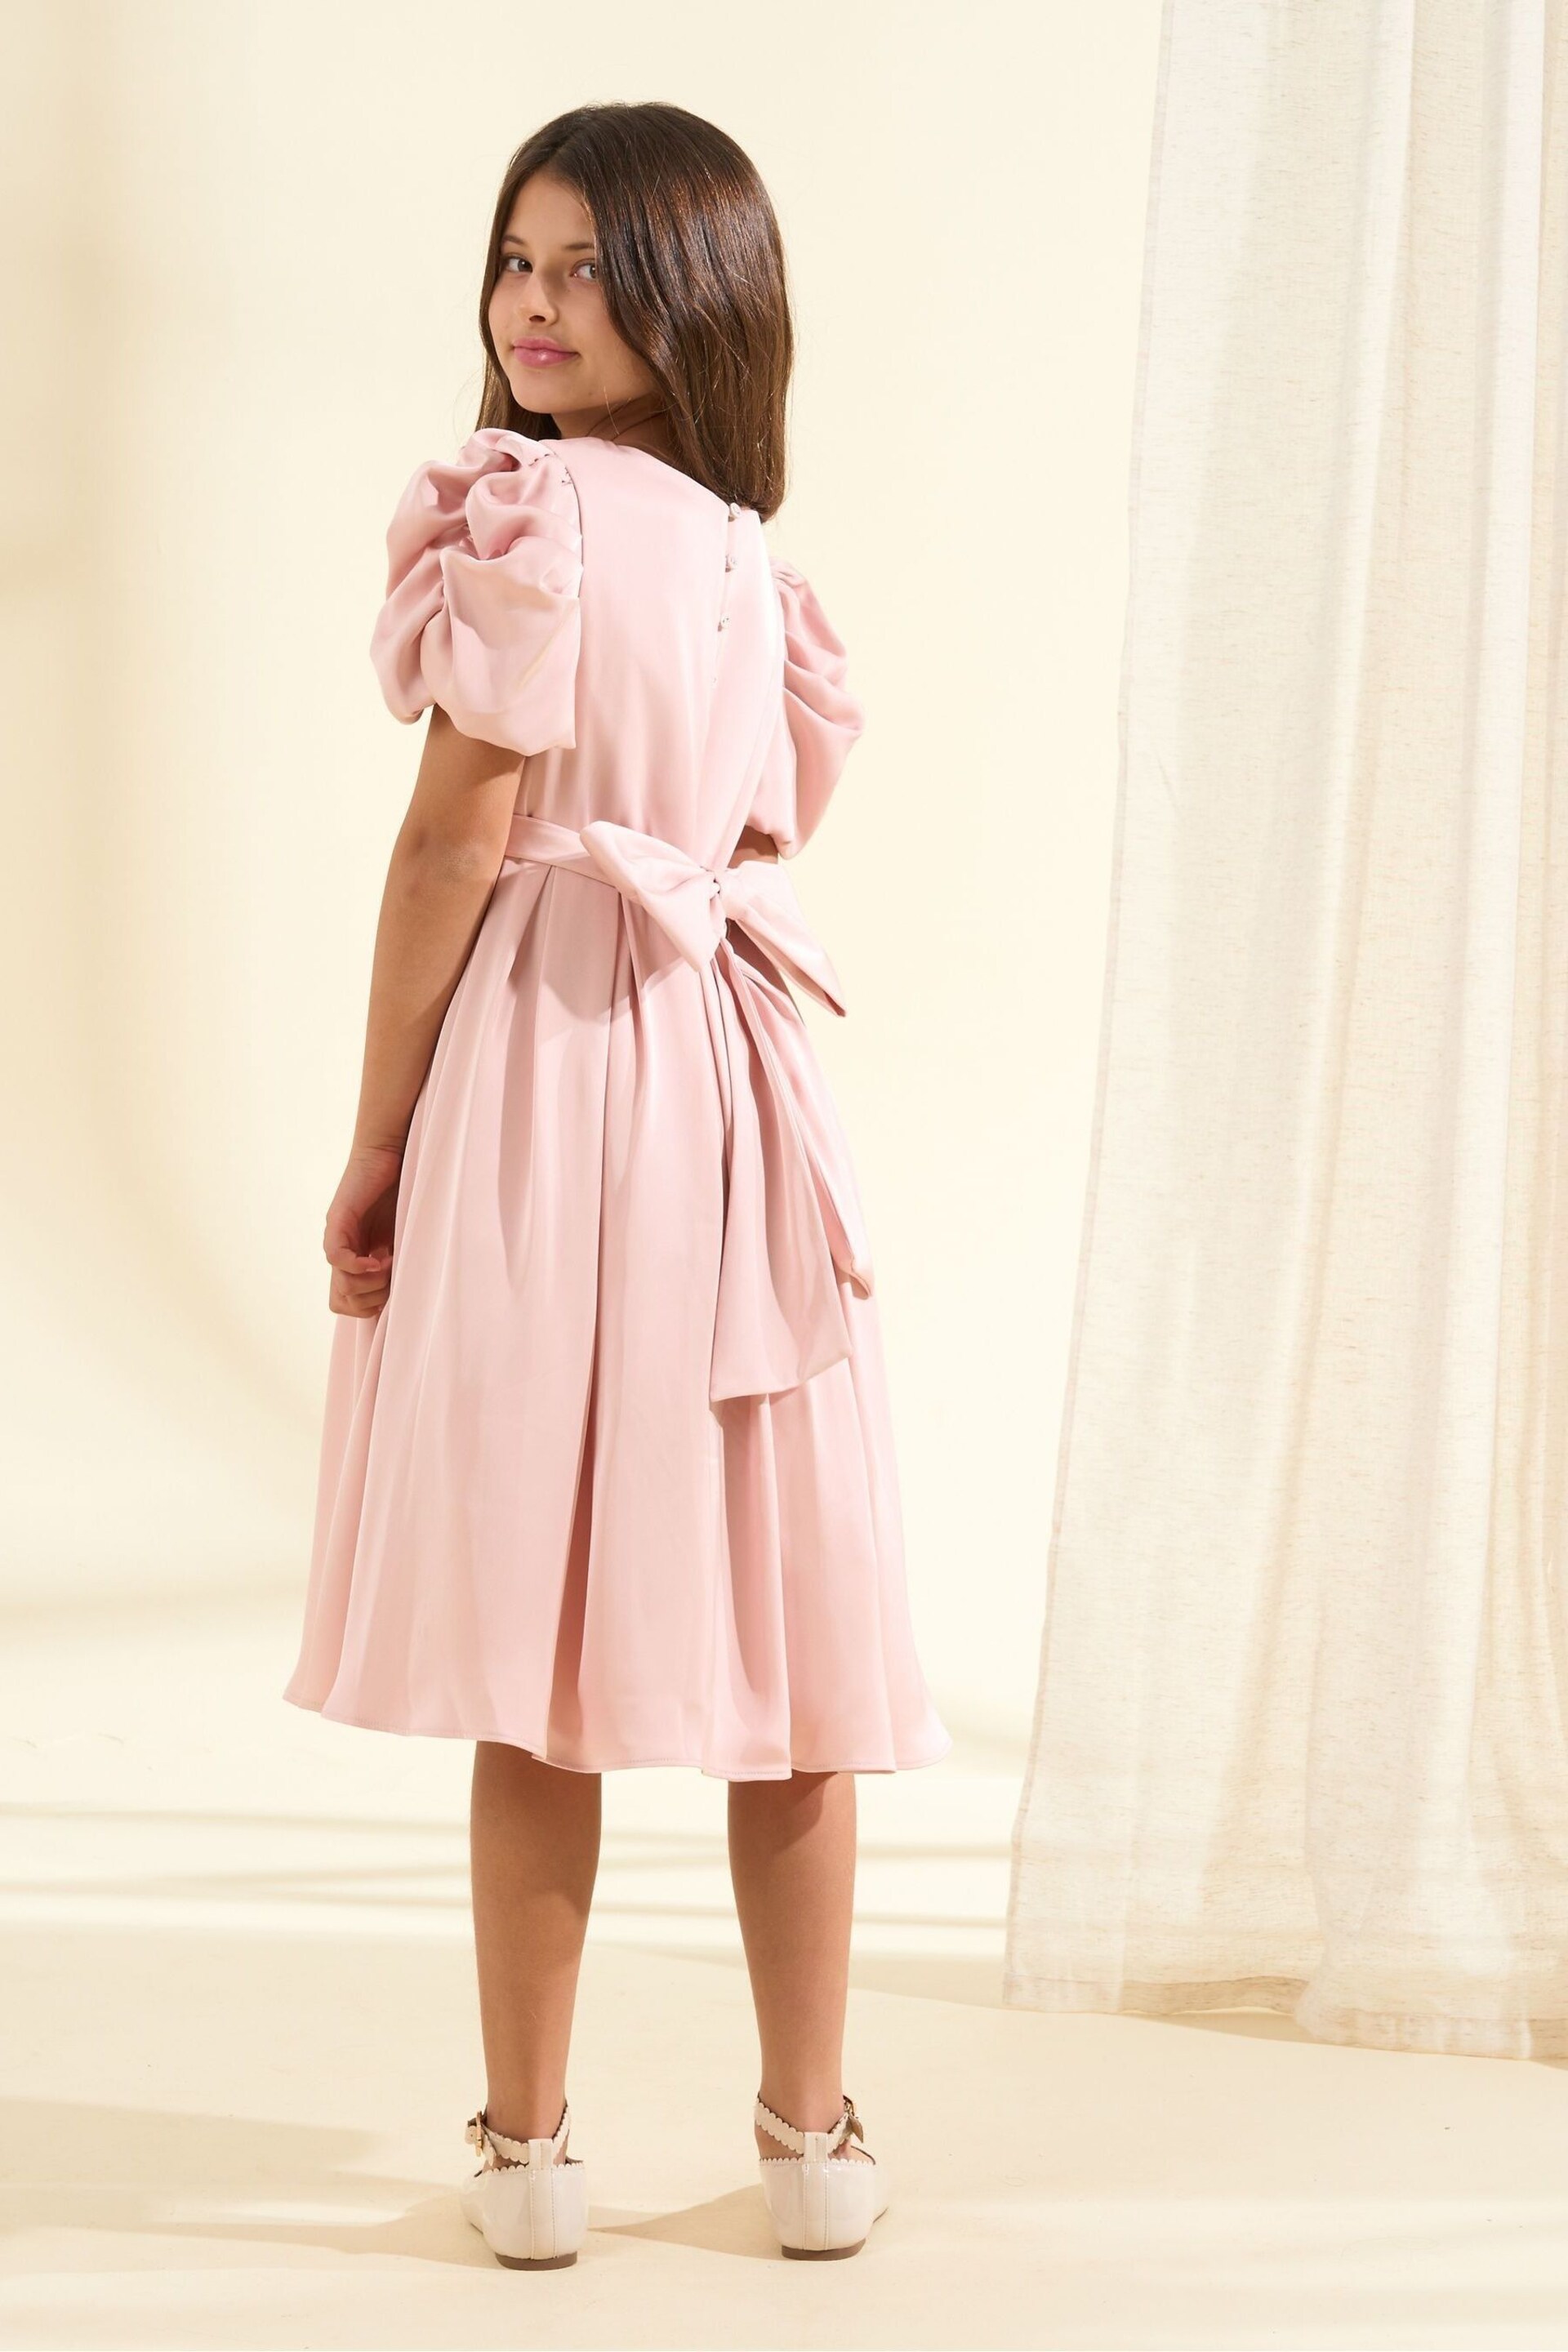 Angel & Rocket Blush Pink Portia Pleated Bodice Bow Dress - Image 4 of 9